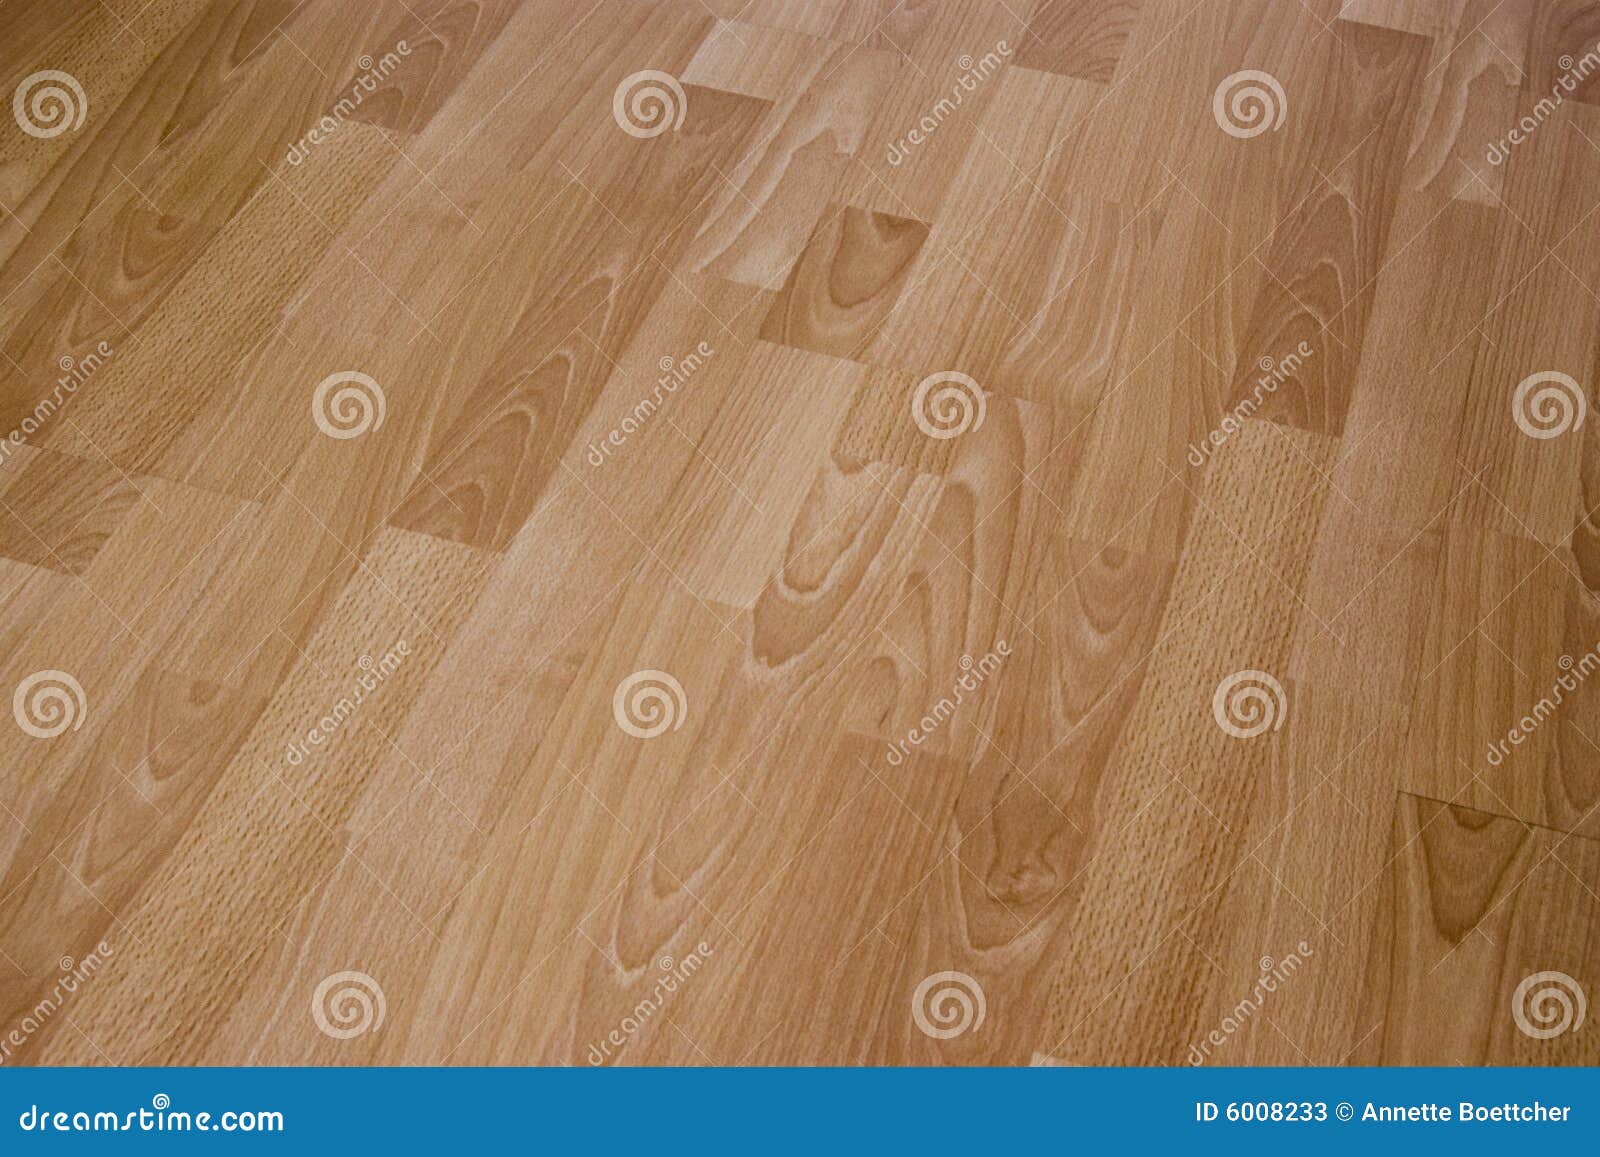 laminated floor boards